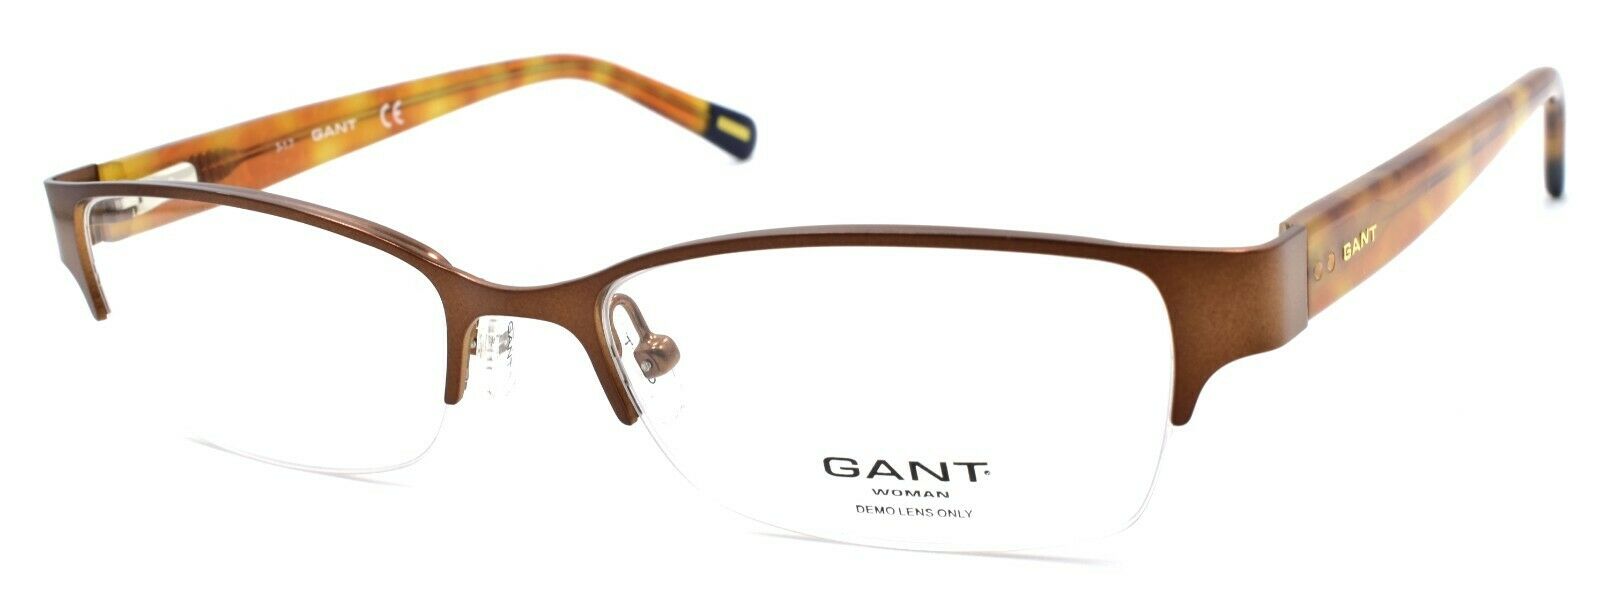 1-GANT GW Eliza SBRN Women's Half-rim Eyeglasses Frames 51-17-135 Satin Brown-715583703353-IKSpecs